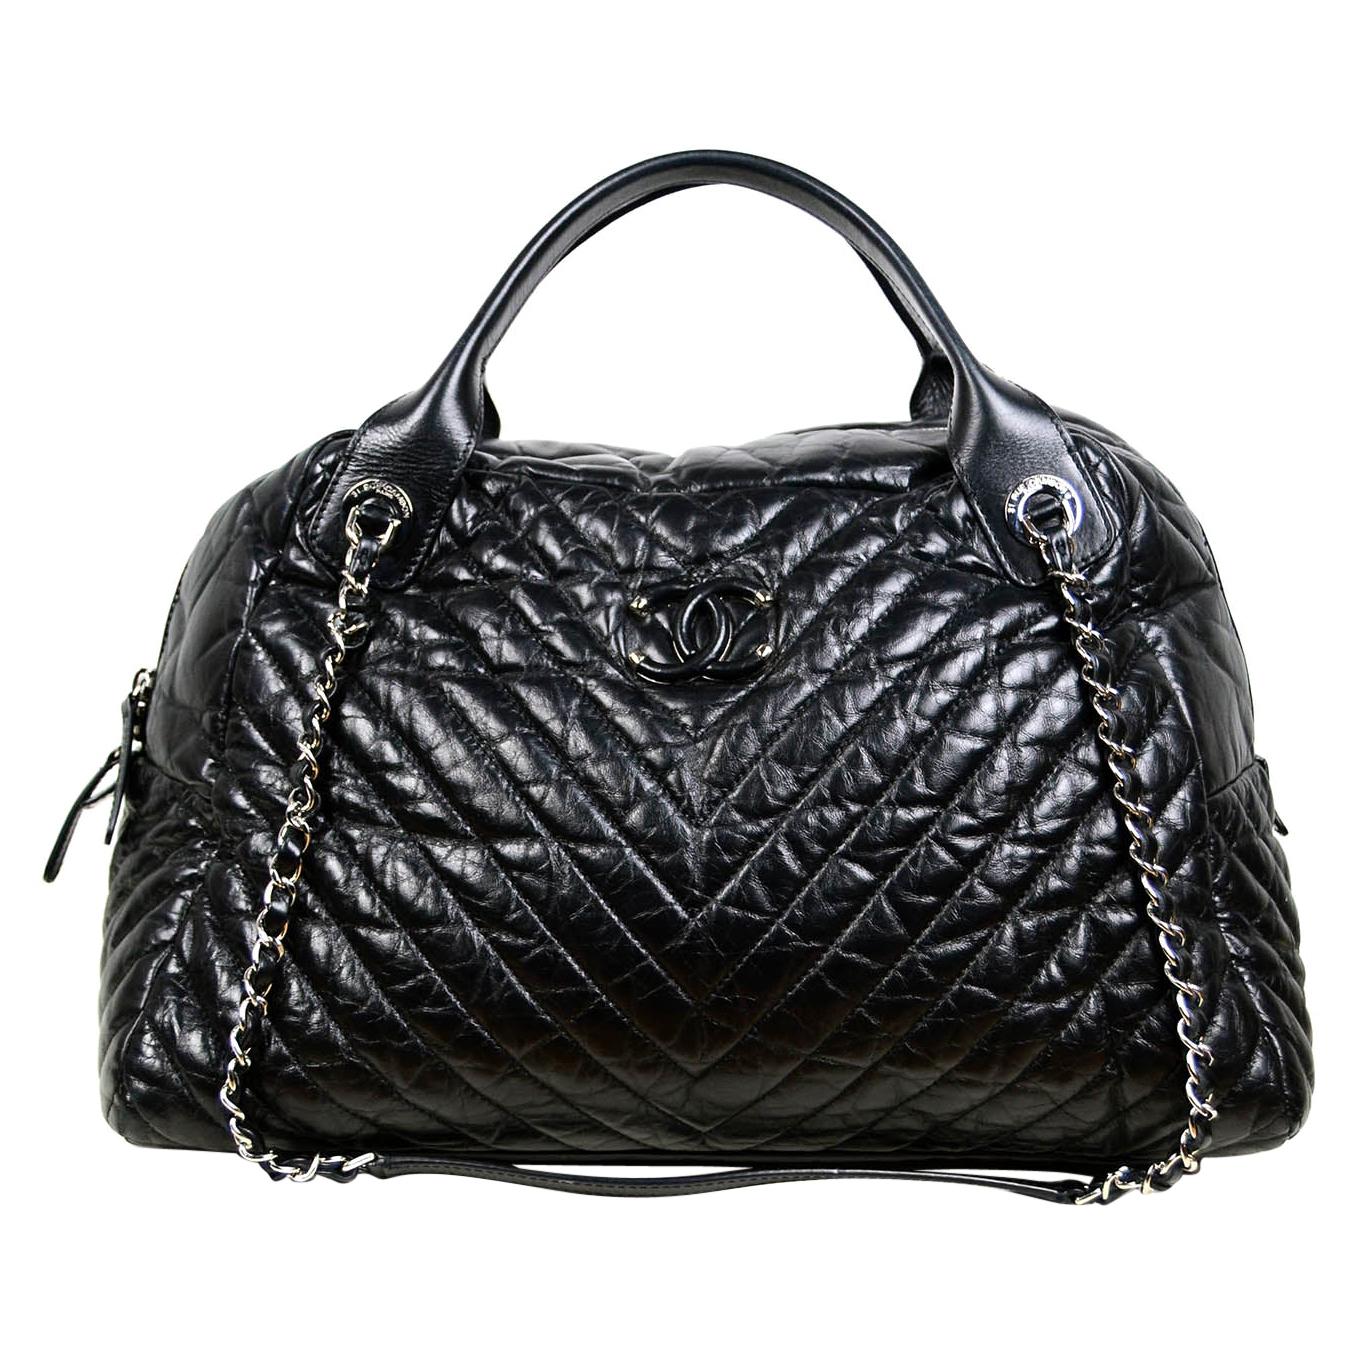 Chanel Black Aged Calfskin Leather Chevron Large Soft Bowling Bag rt. $4, 200